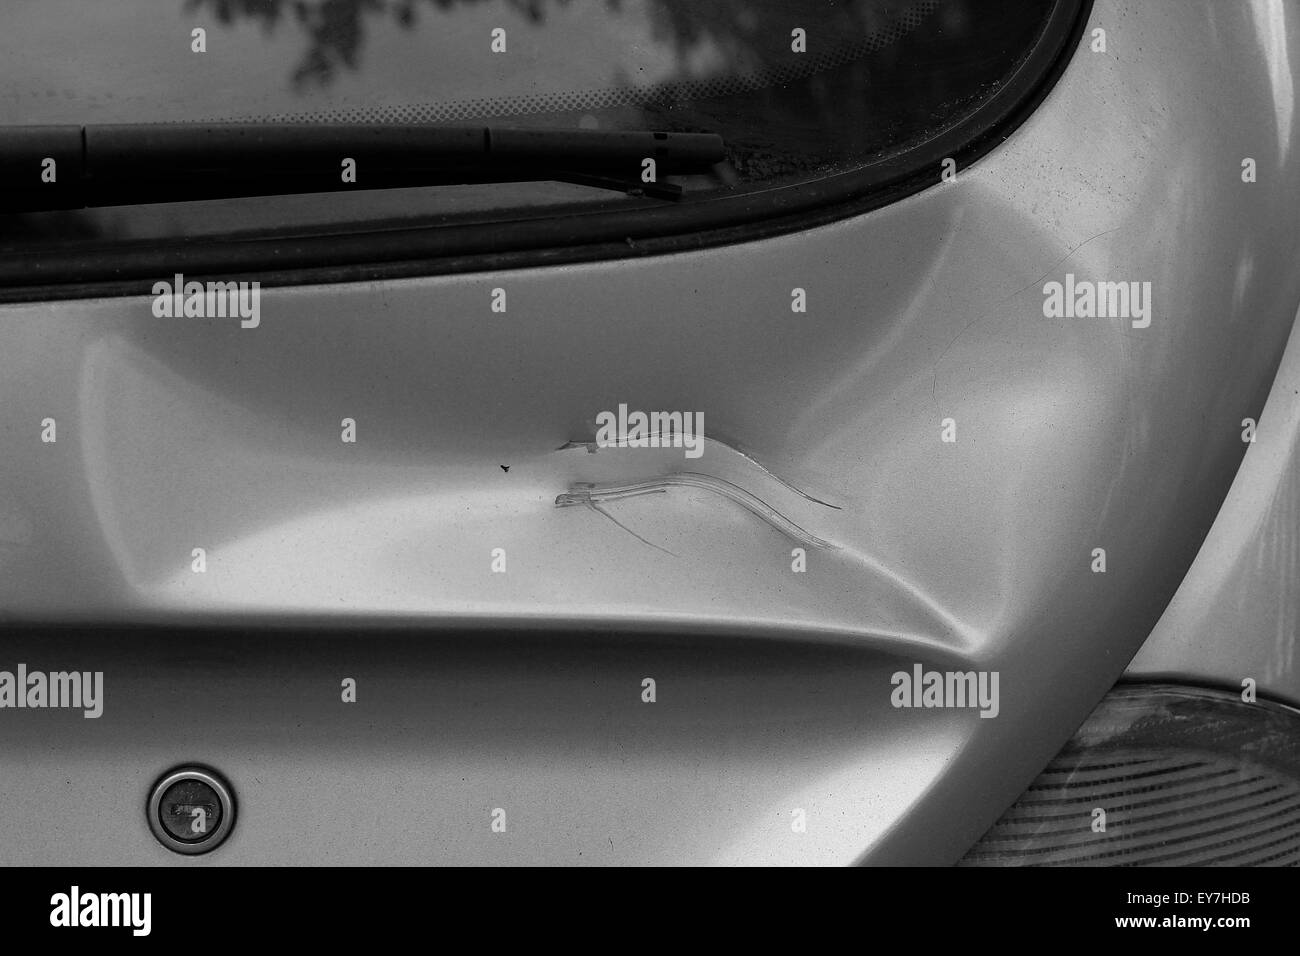 Damaged Lancia Y car Stock Photo